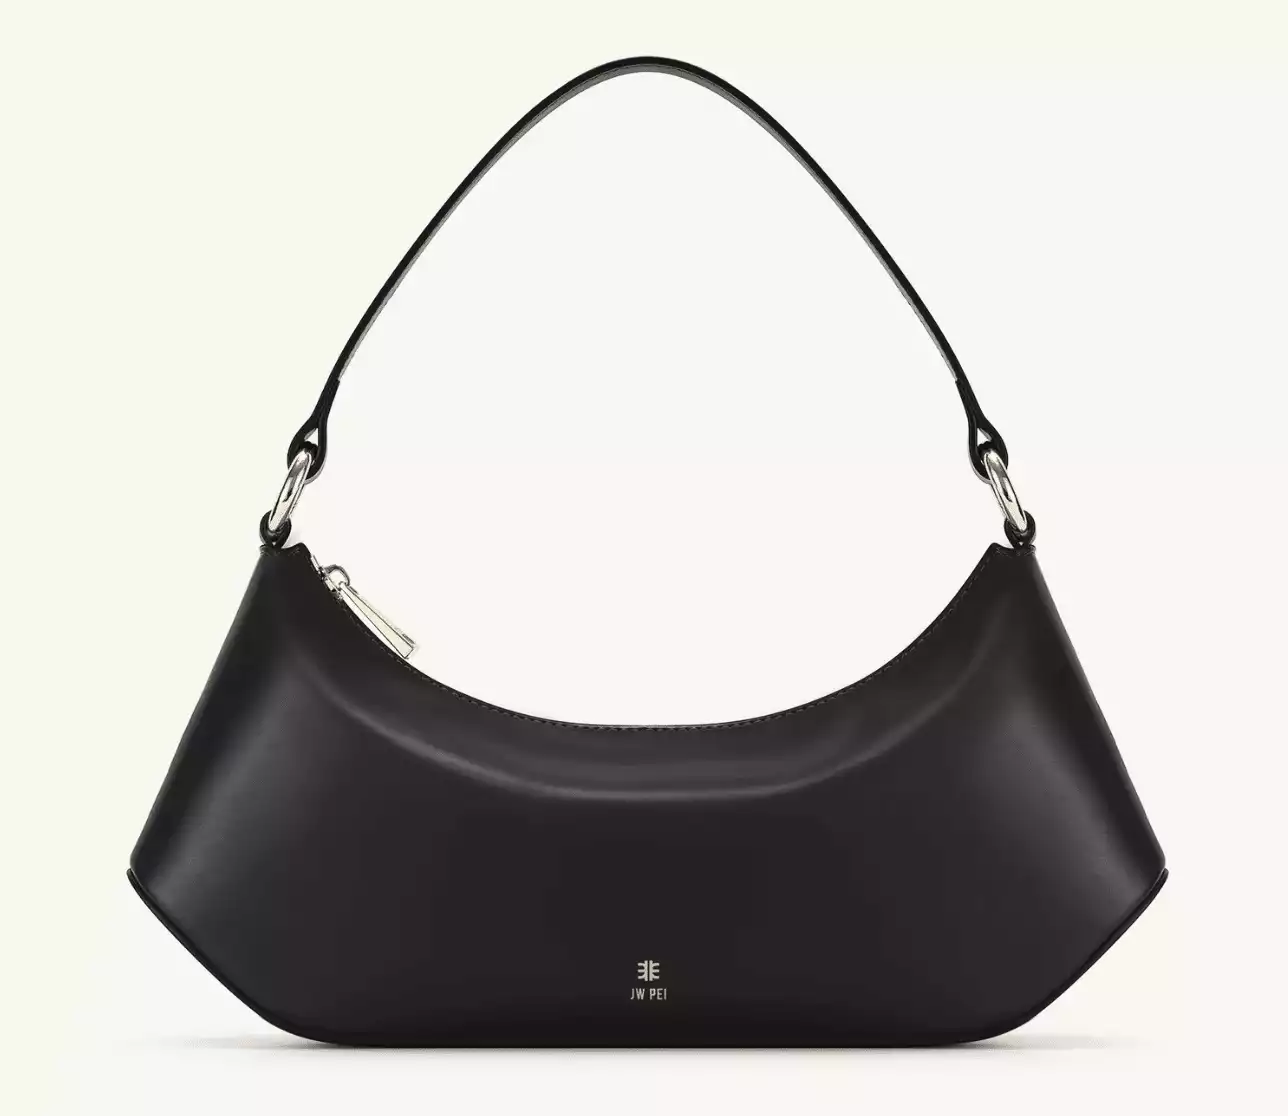 JW PEI Lily Shoulder Handbag